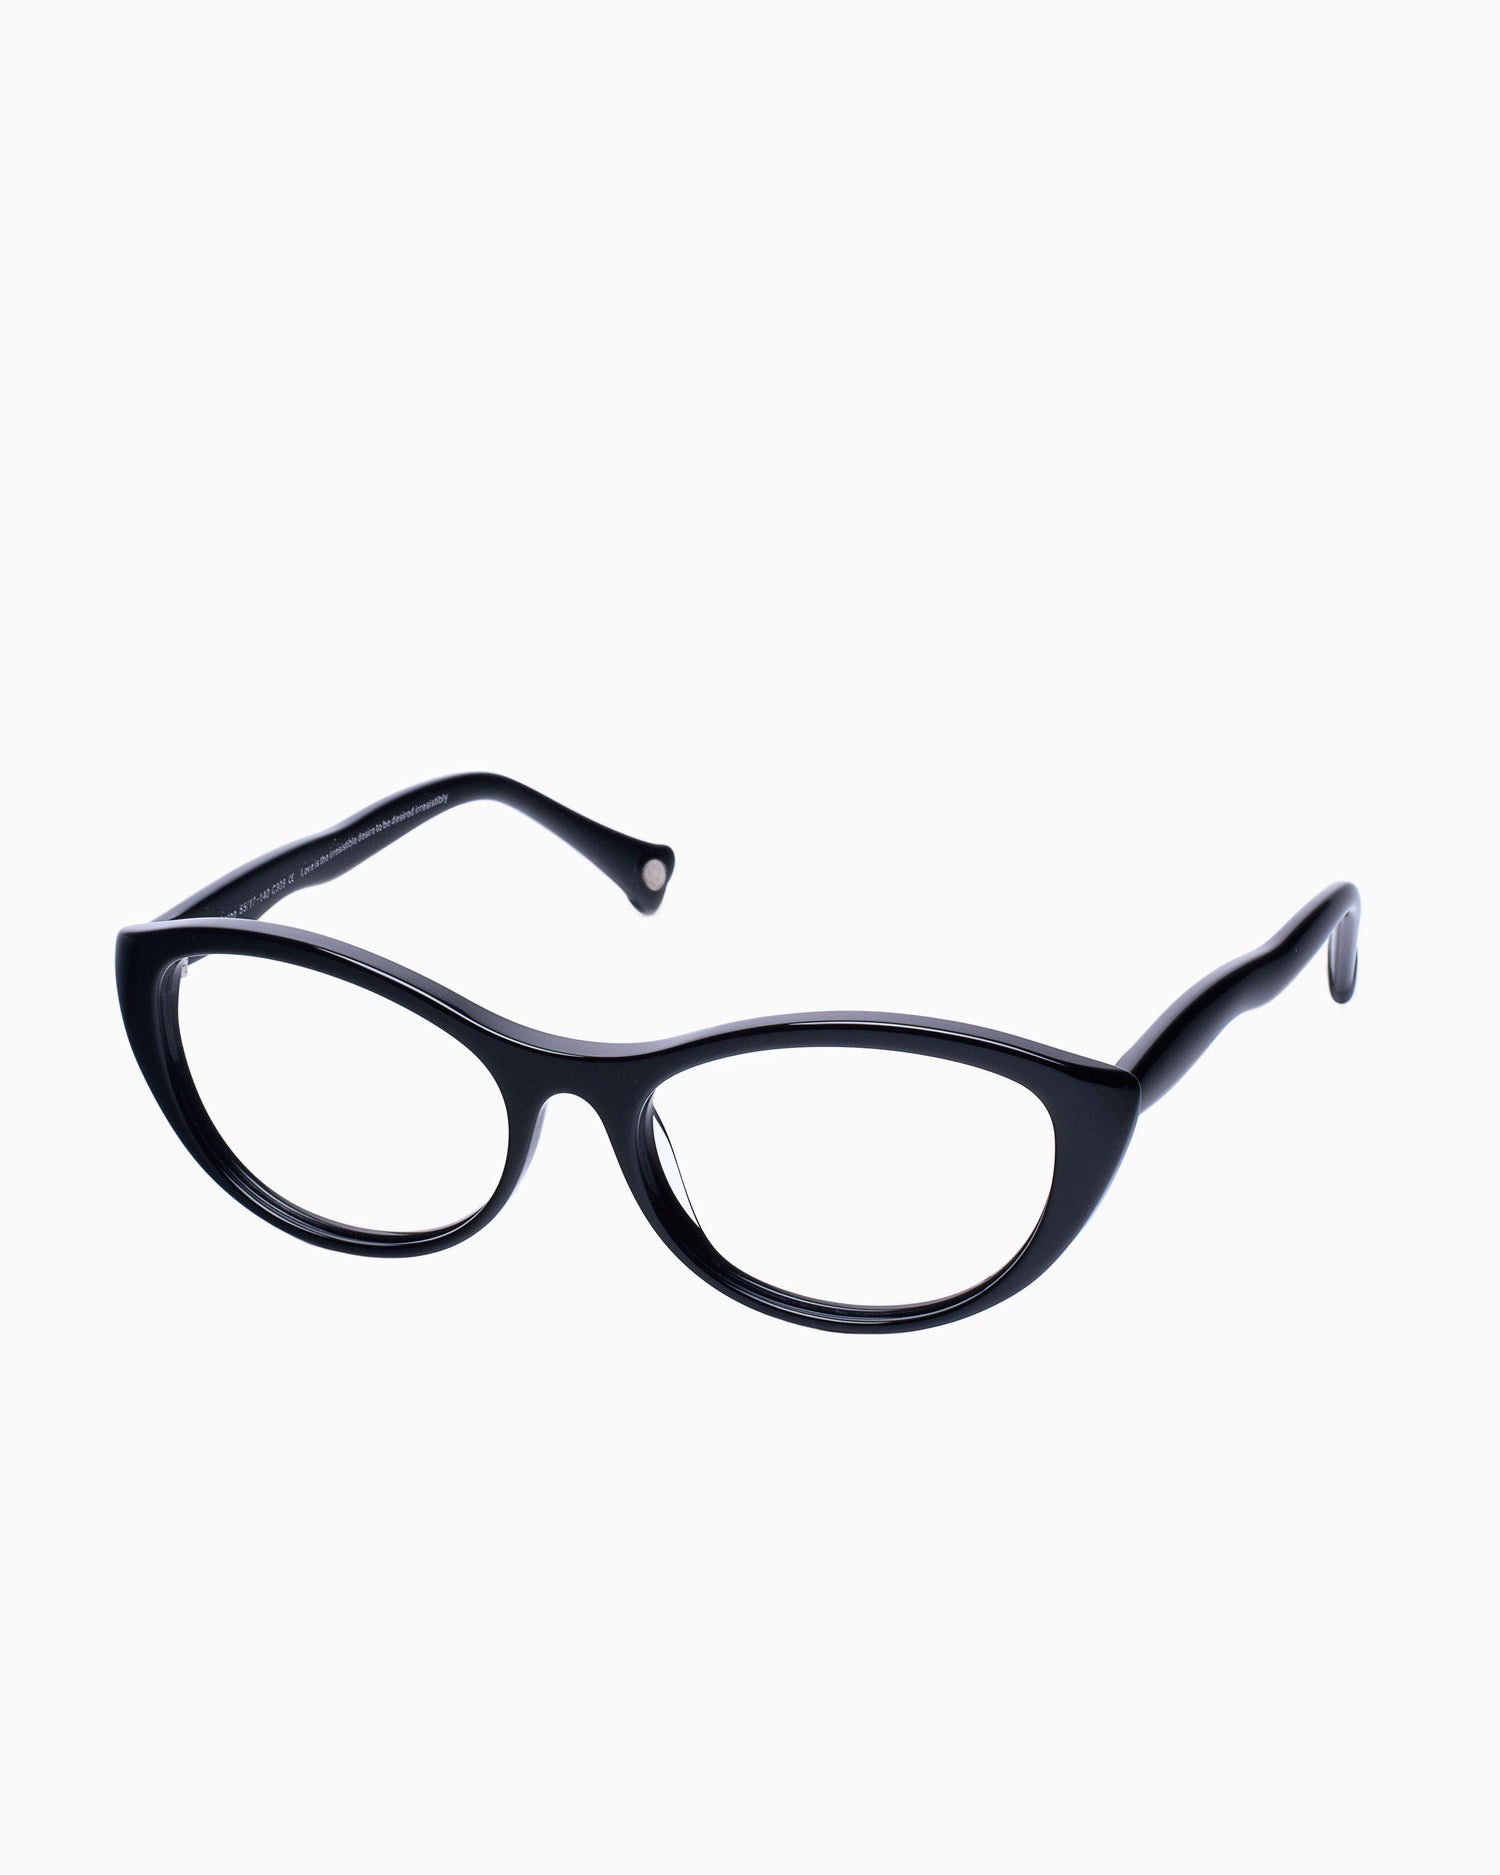 Spectacleeyeworks - Doree - C306 | Bar à lunettes:  Marie-Sophie Dion